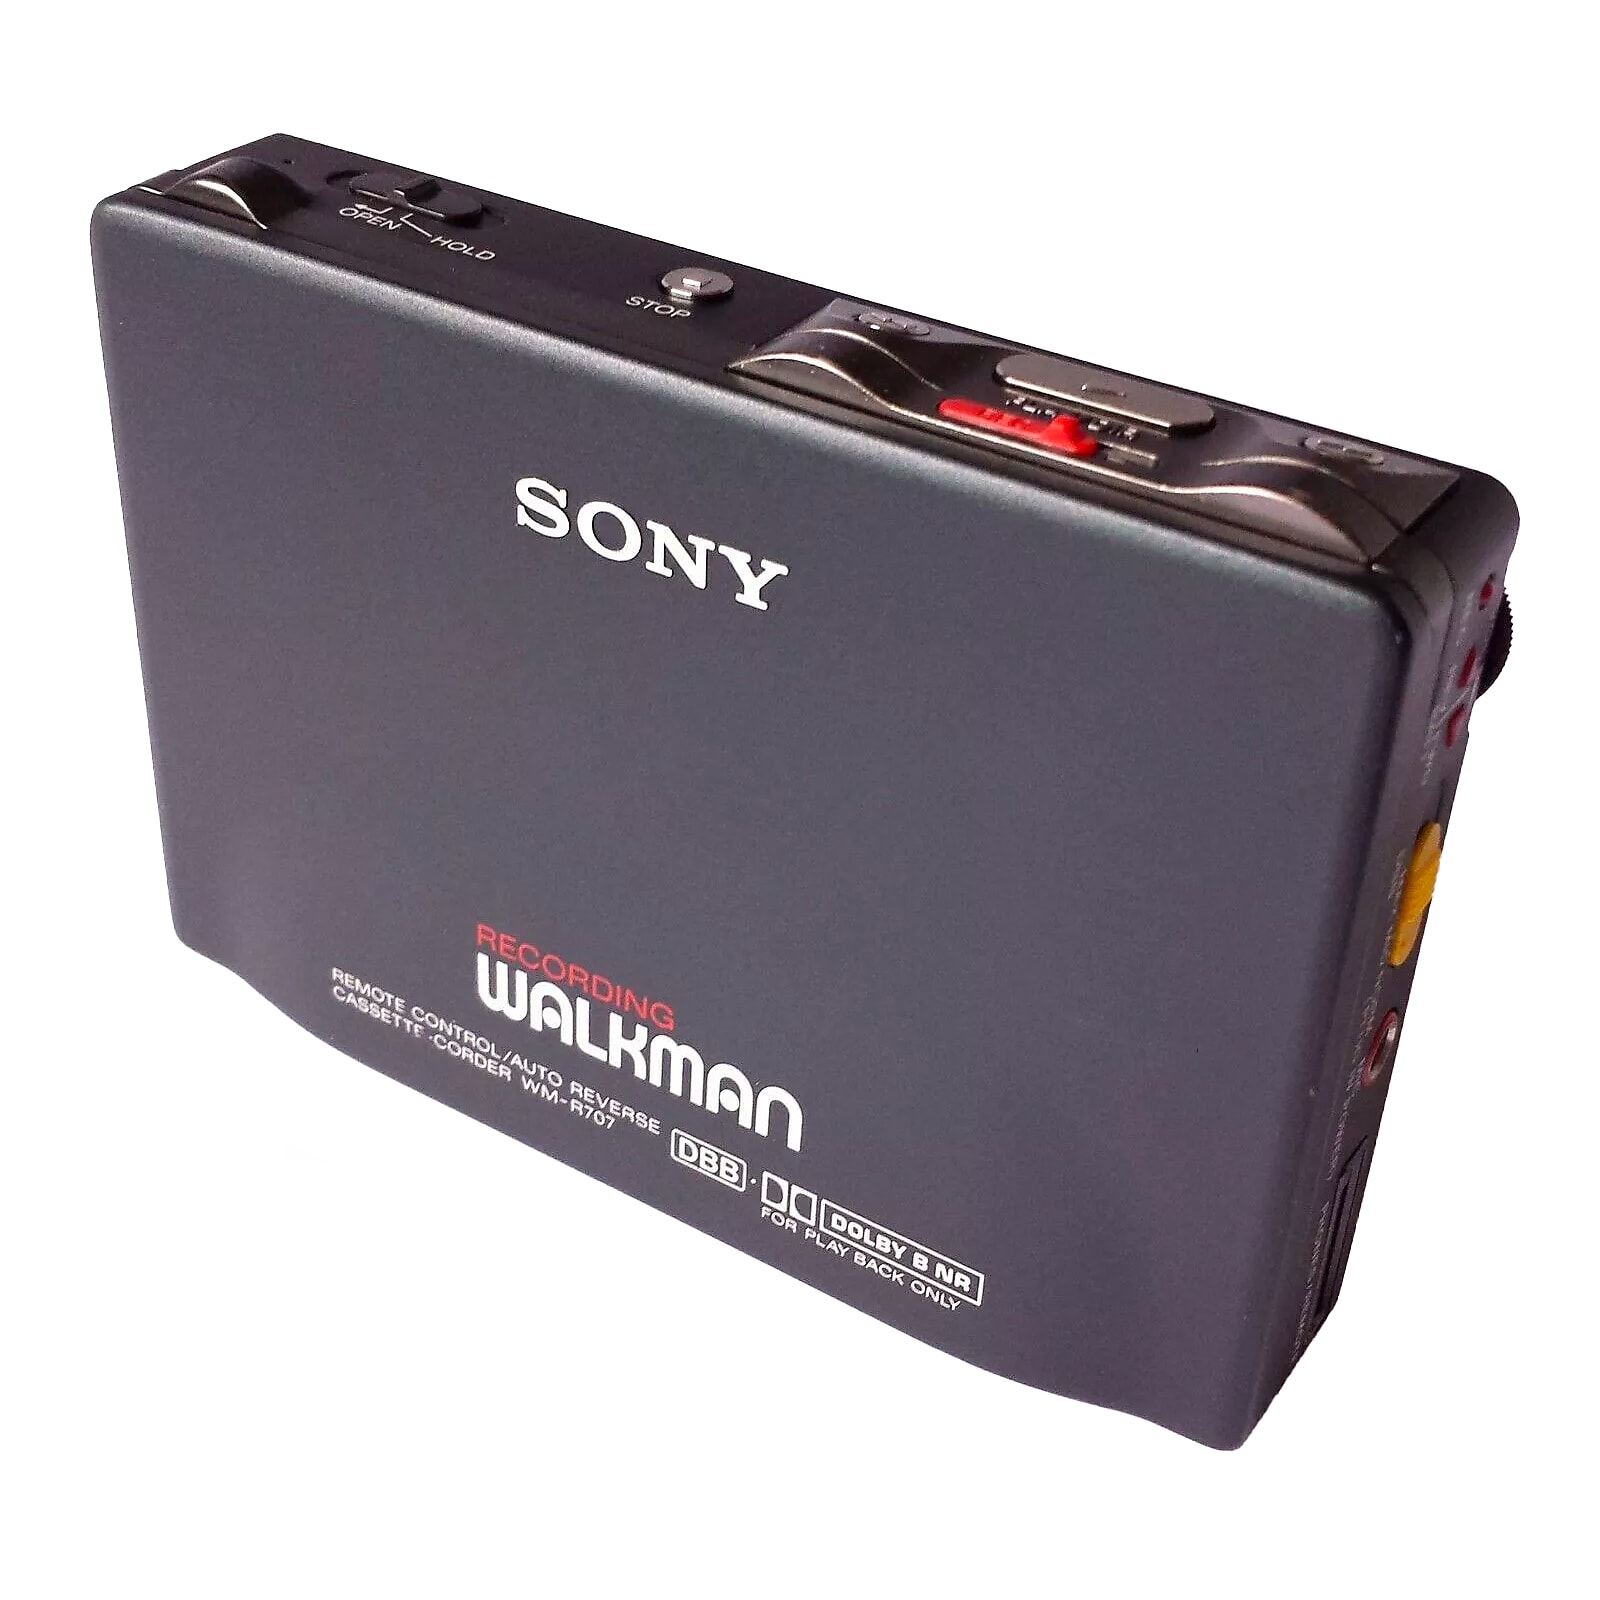 Sony WM-R707 Walkman Portable Stereo Cassette Recorder (1988) | Reverb